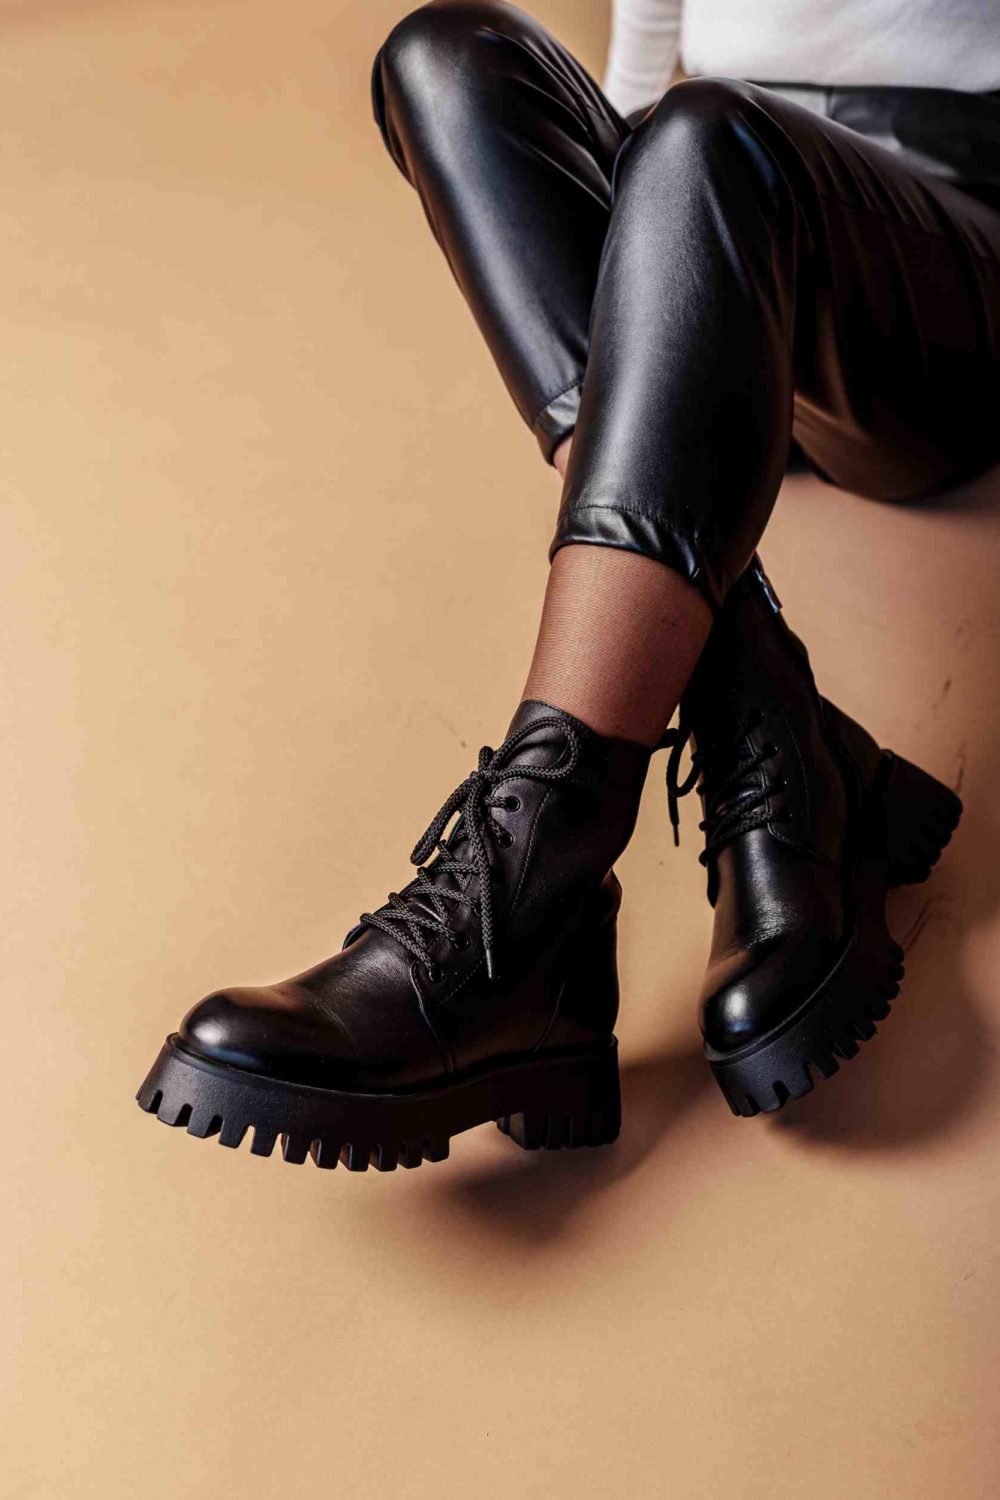 How Hard Yakka Boots in Moorabbin Can Transform Your Workwear